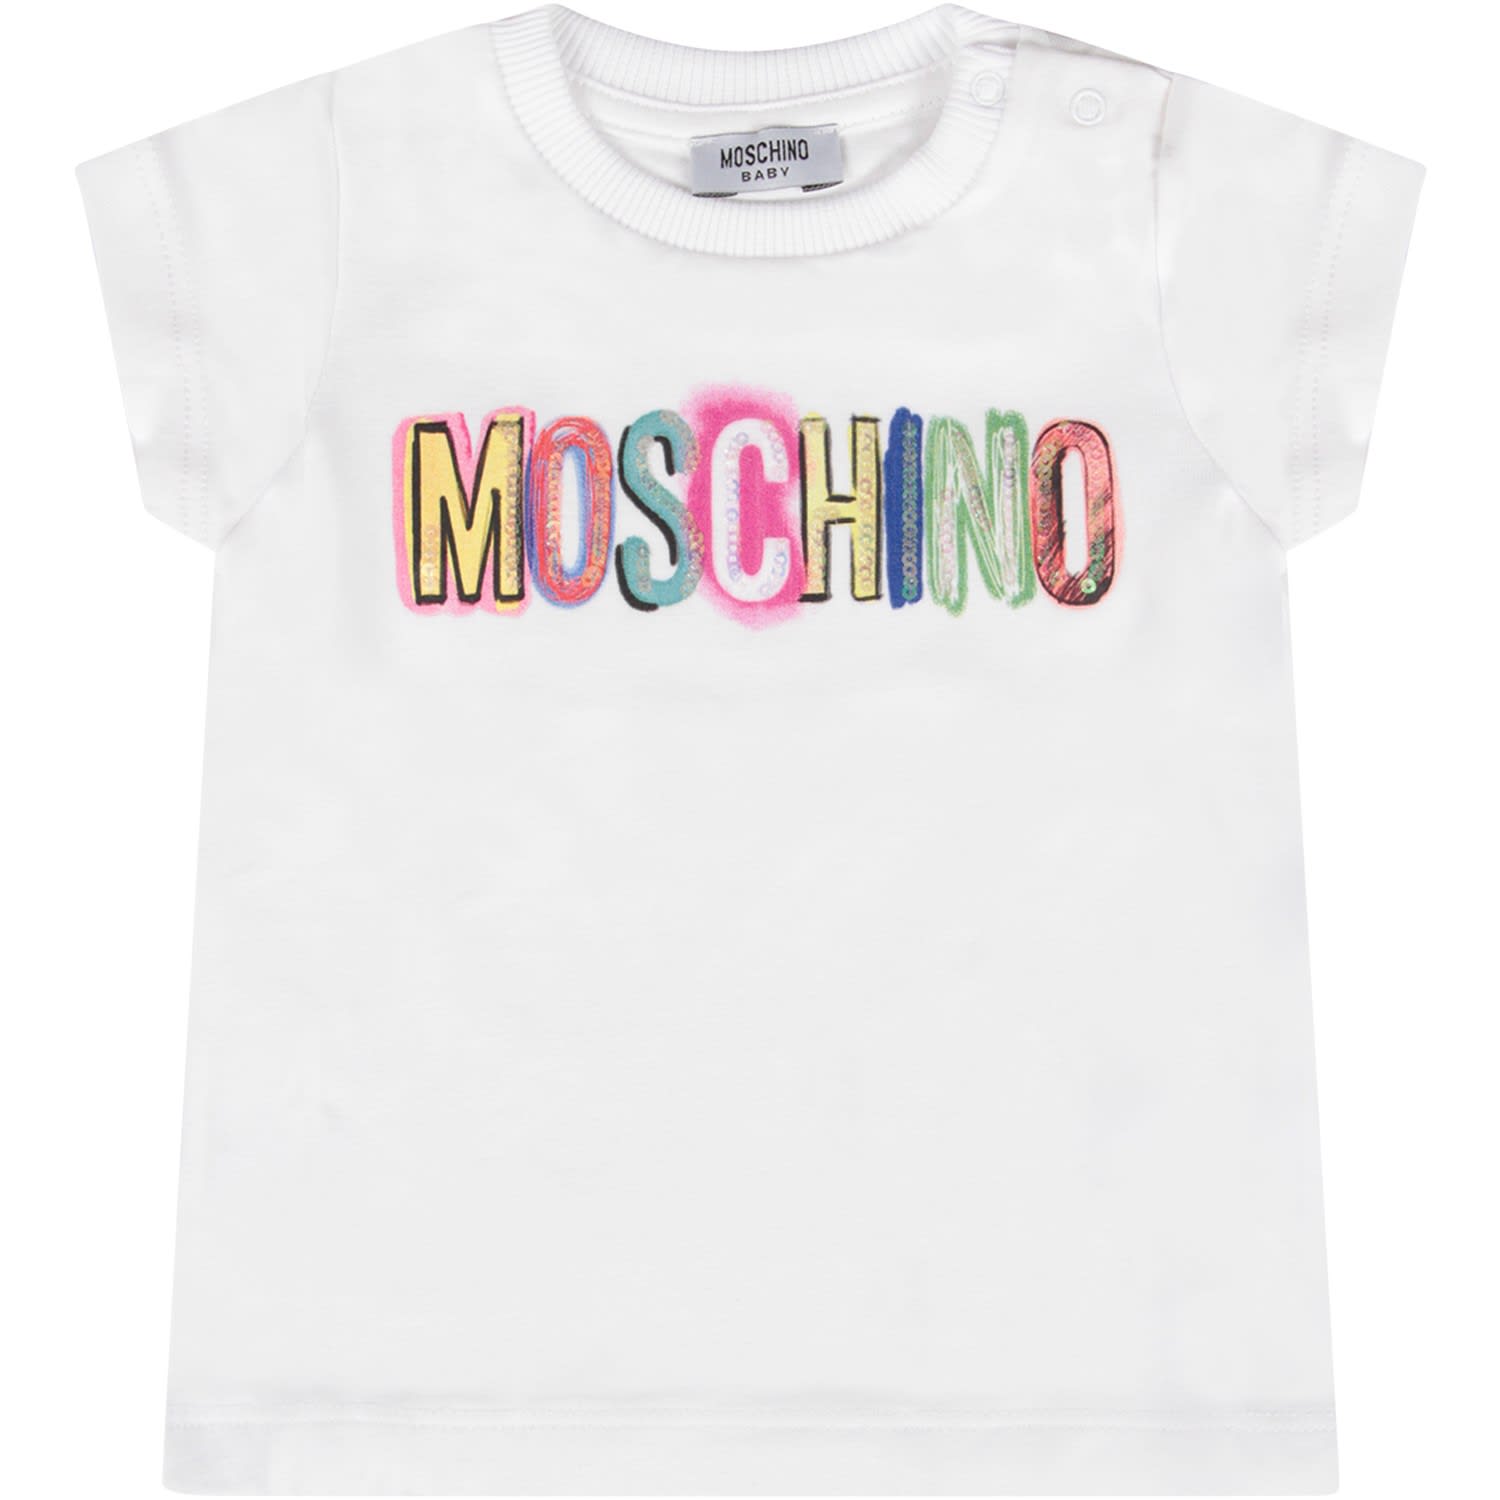 moschino colorful shirt